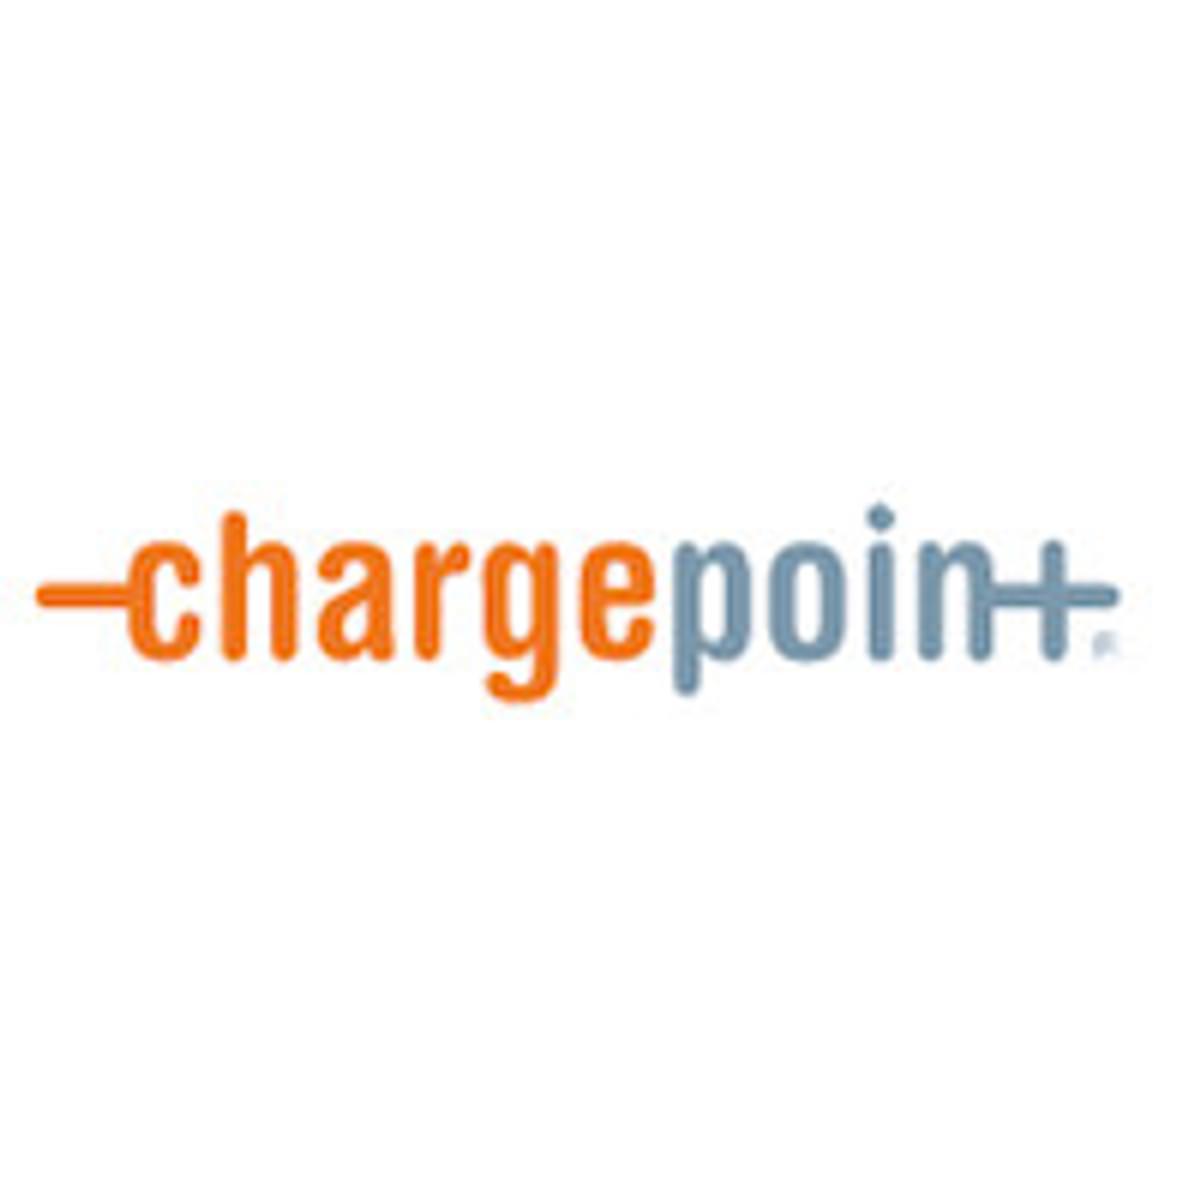 Oplaadnetwerk ChargePoint integreert met Android Auto image